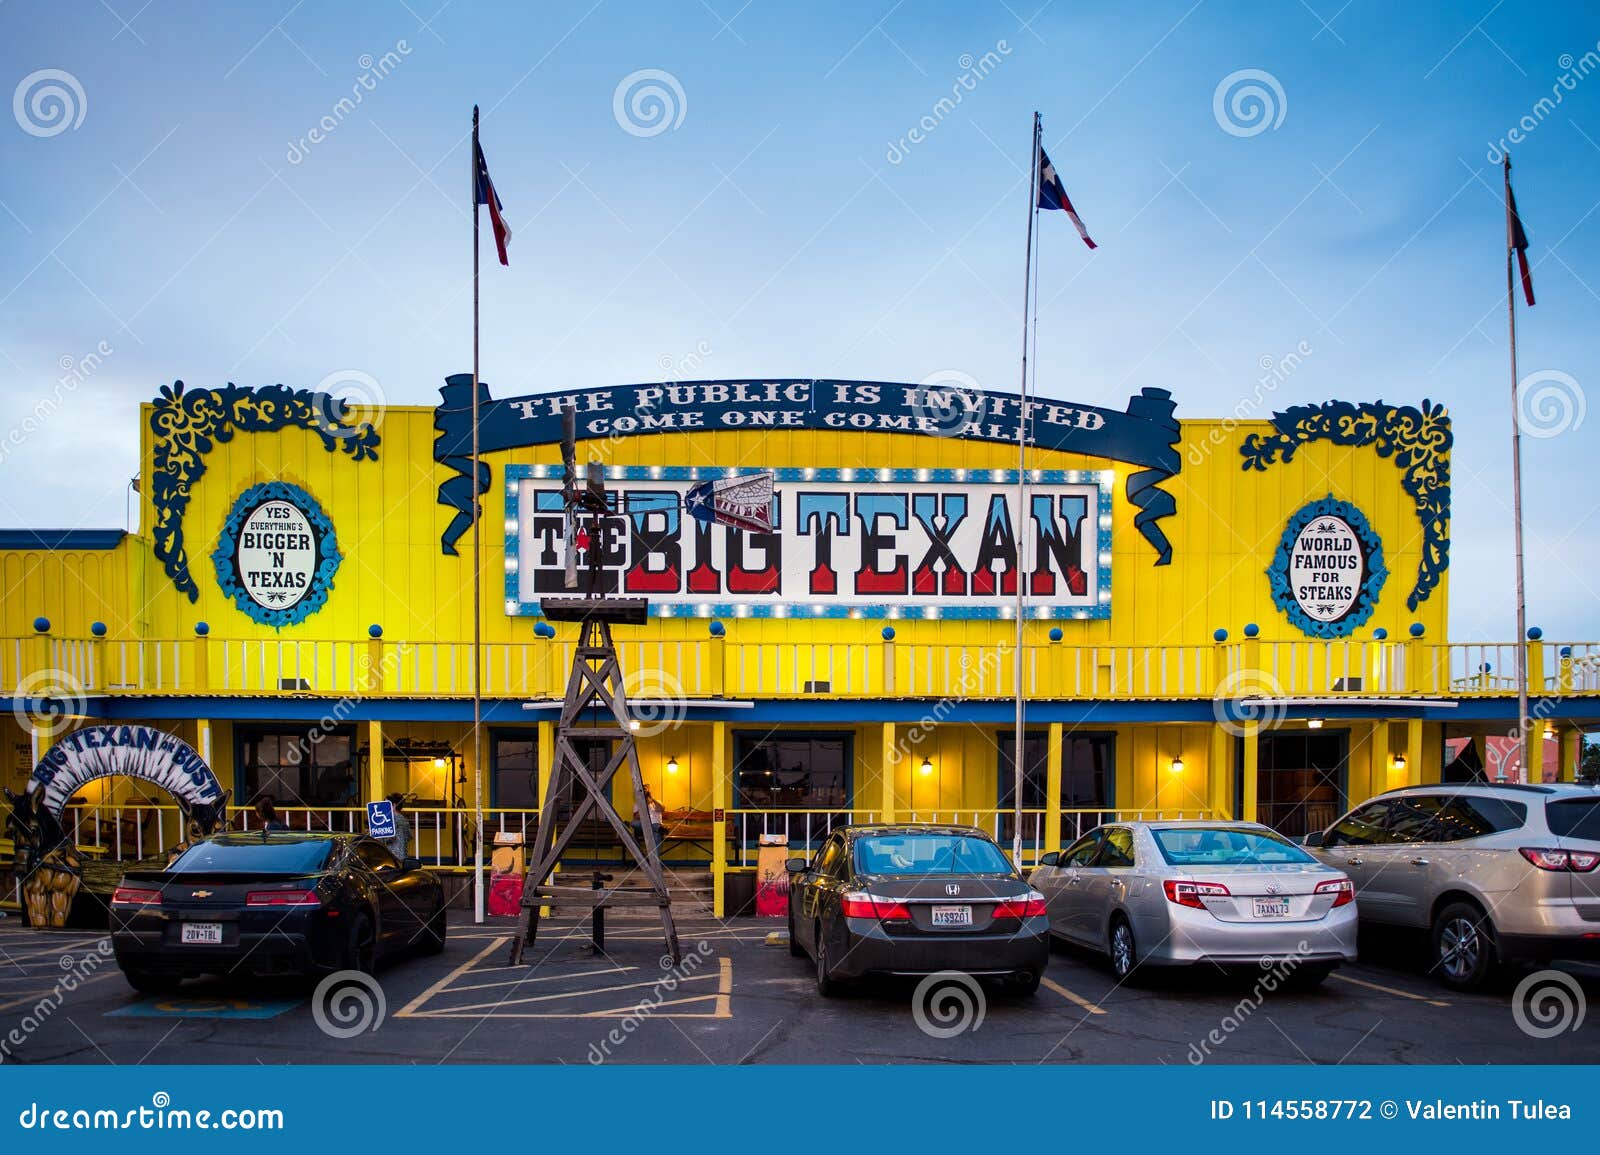 big-texan-steak-ranch-steakhouse-restaurant-motel-located-amarillo-texas-united-states-which-opened-114558772.jpg